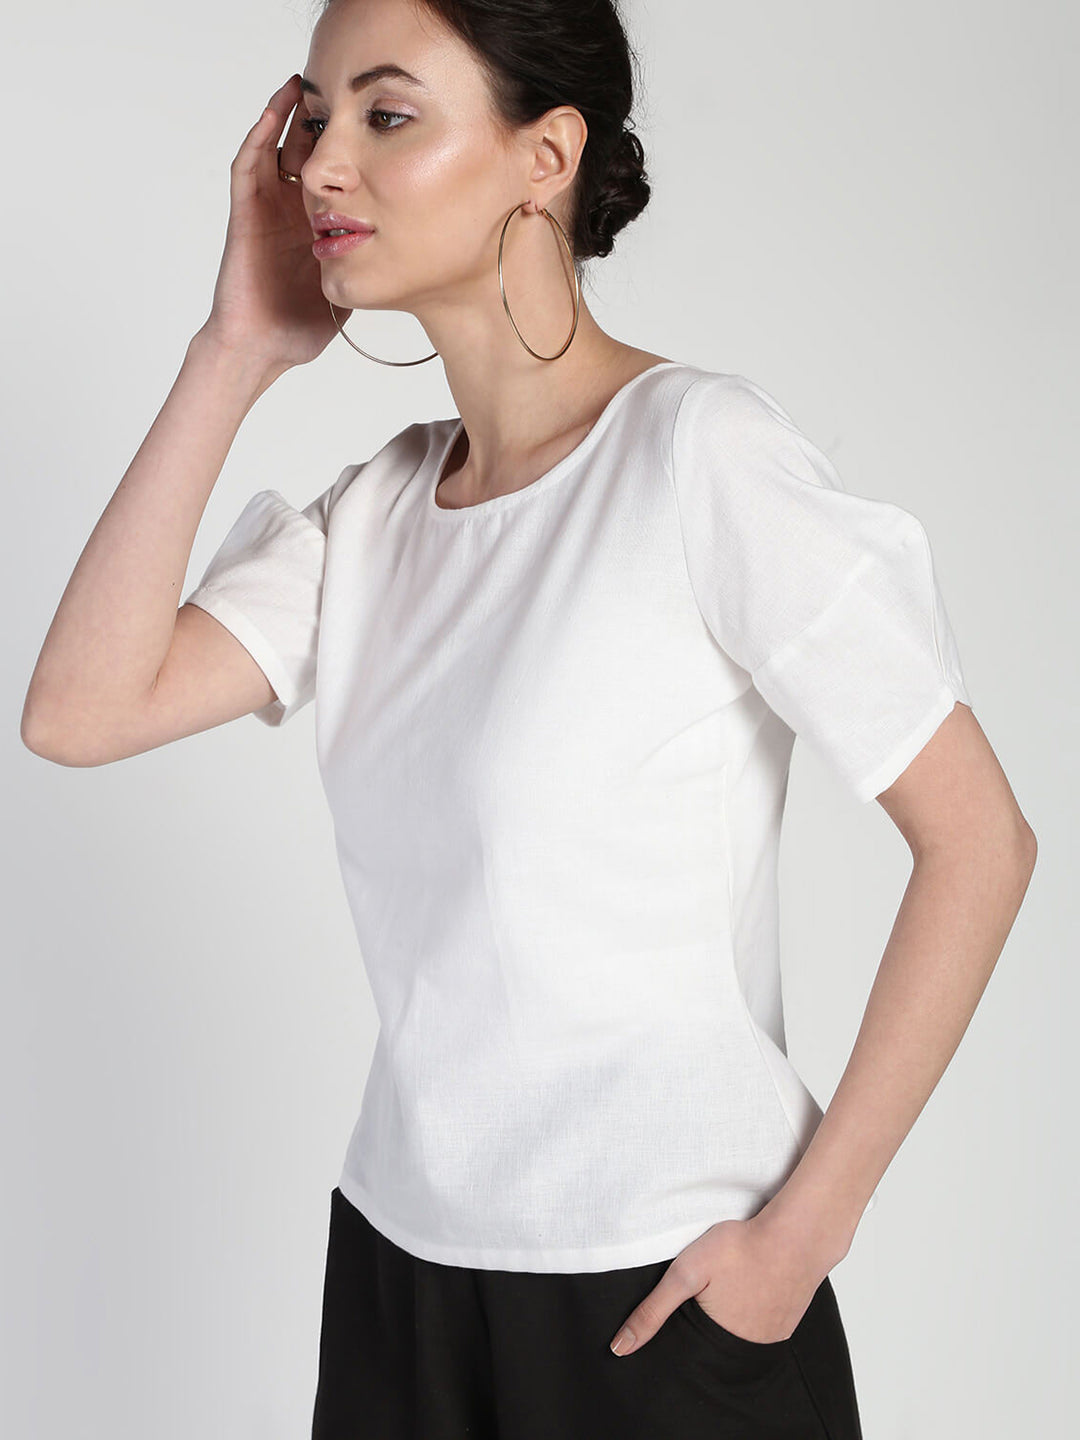 Geometric structured comfort cotton linen top